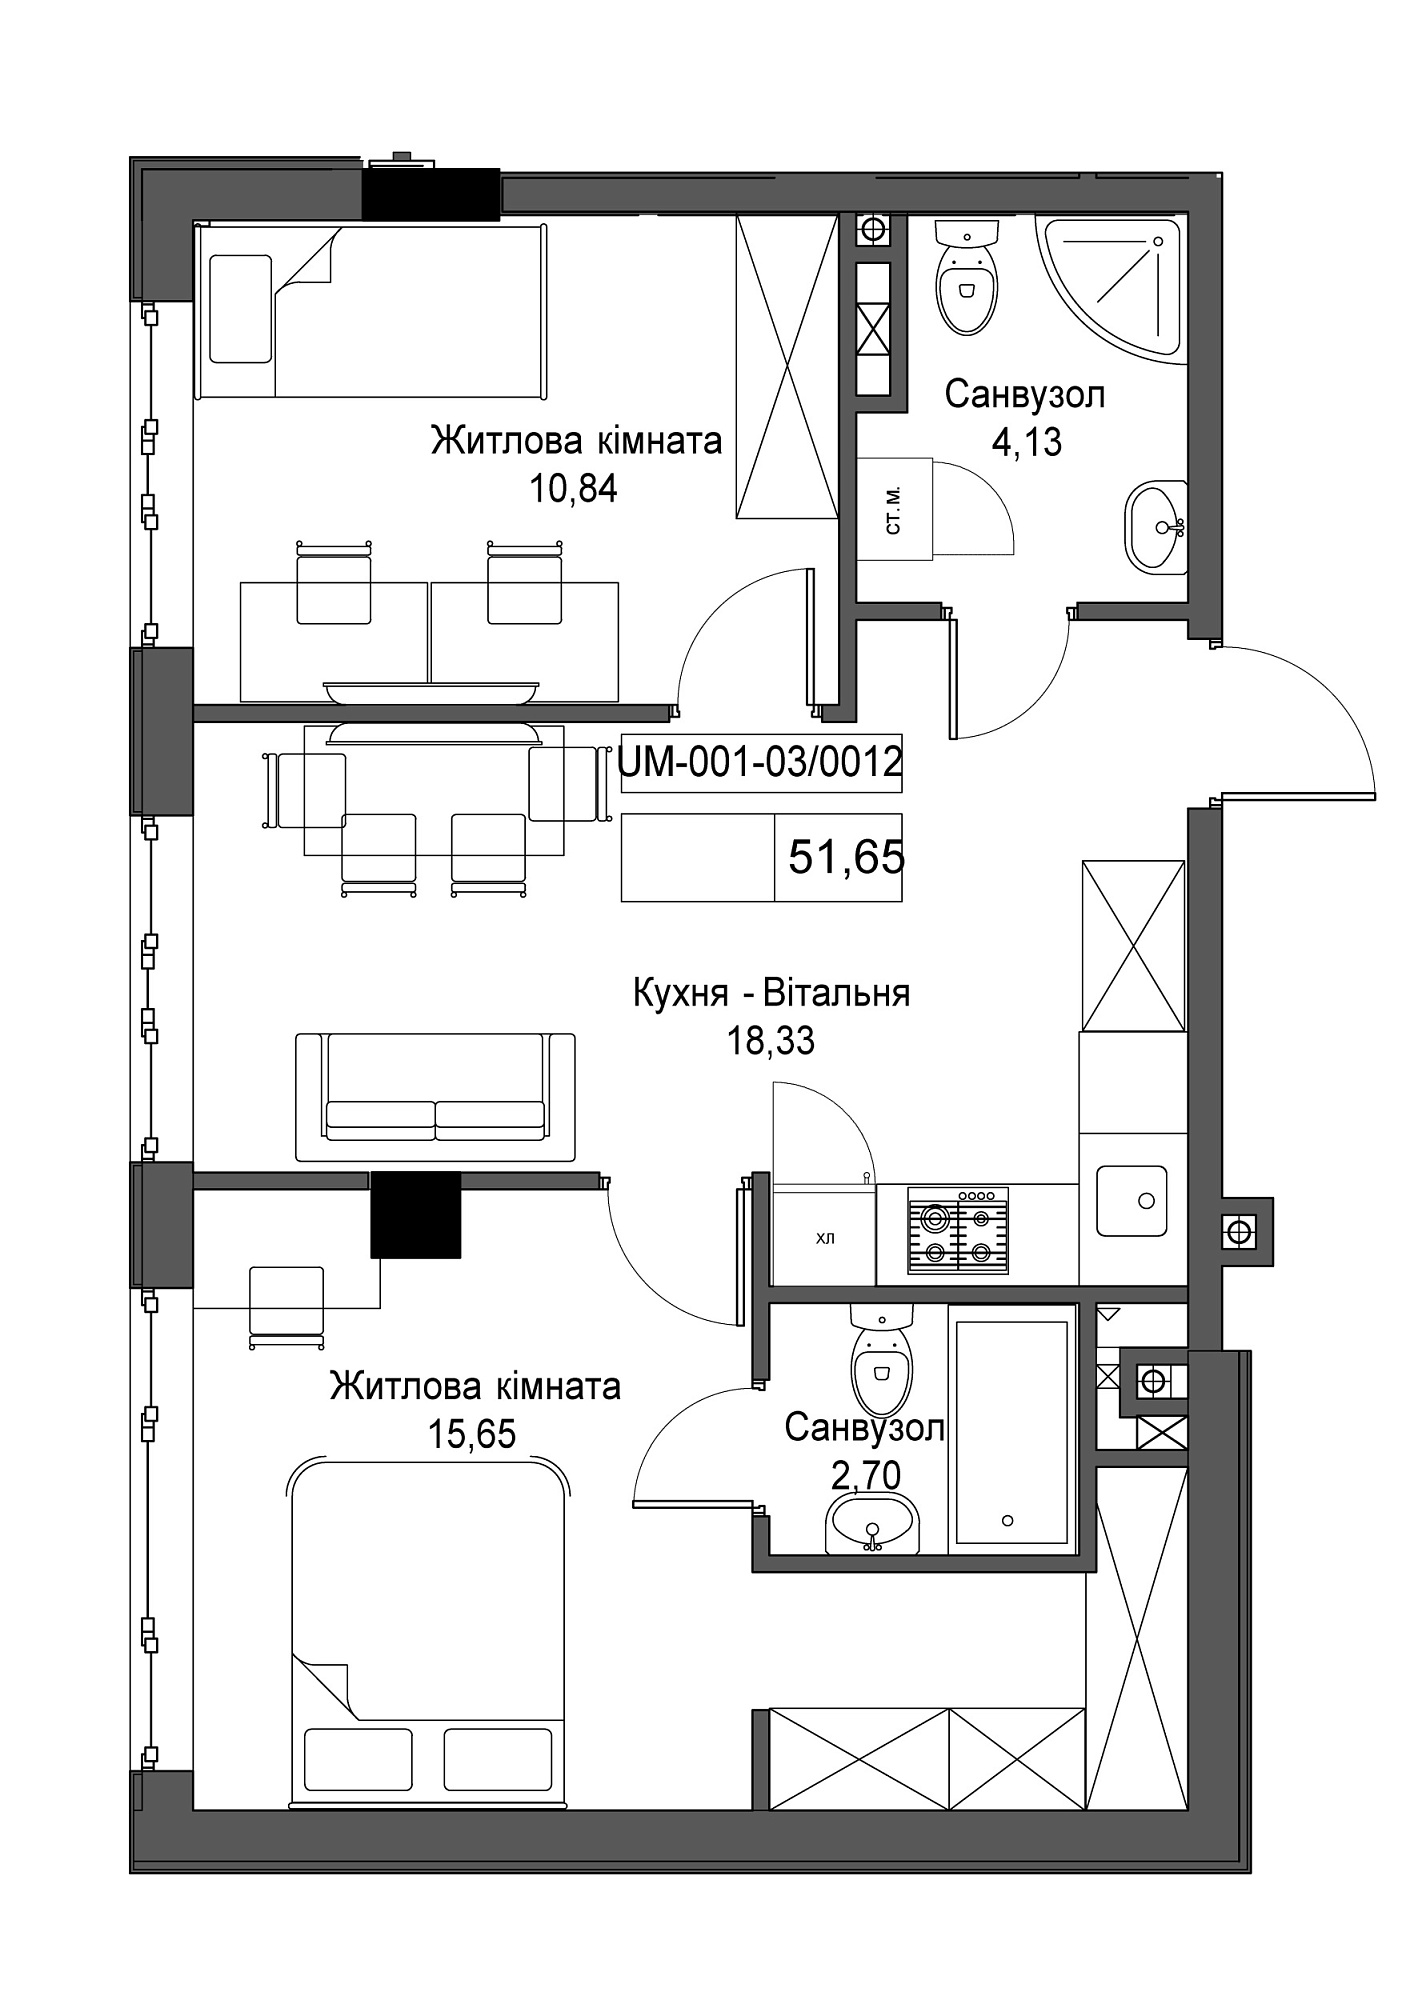 Планування 2-к квартира площею 51.65м2, UM-001-03/0012.